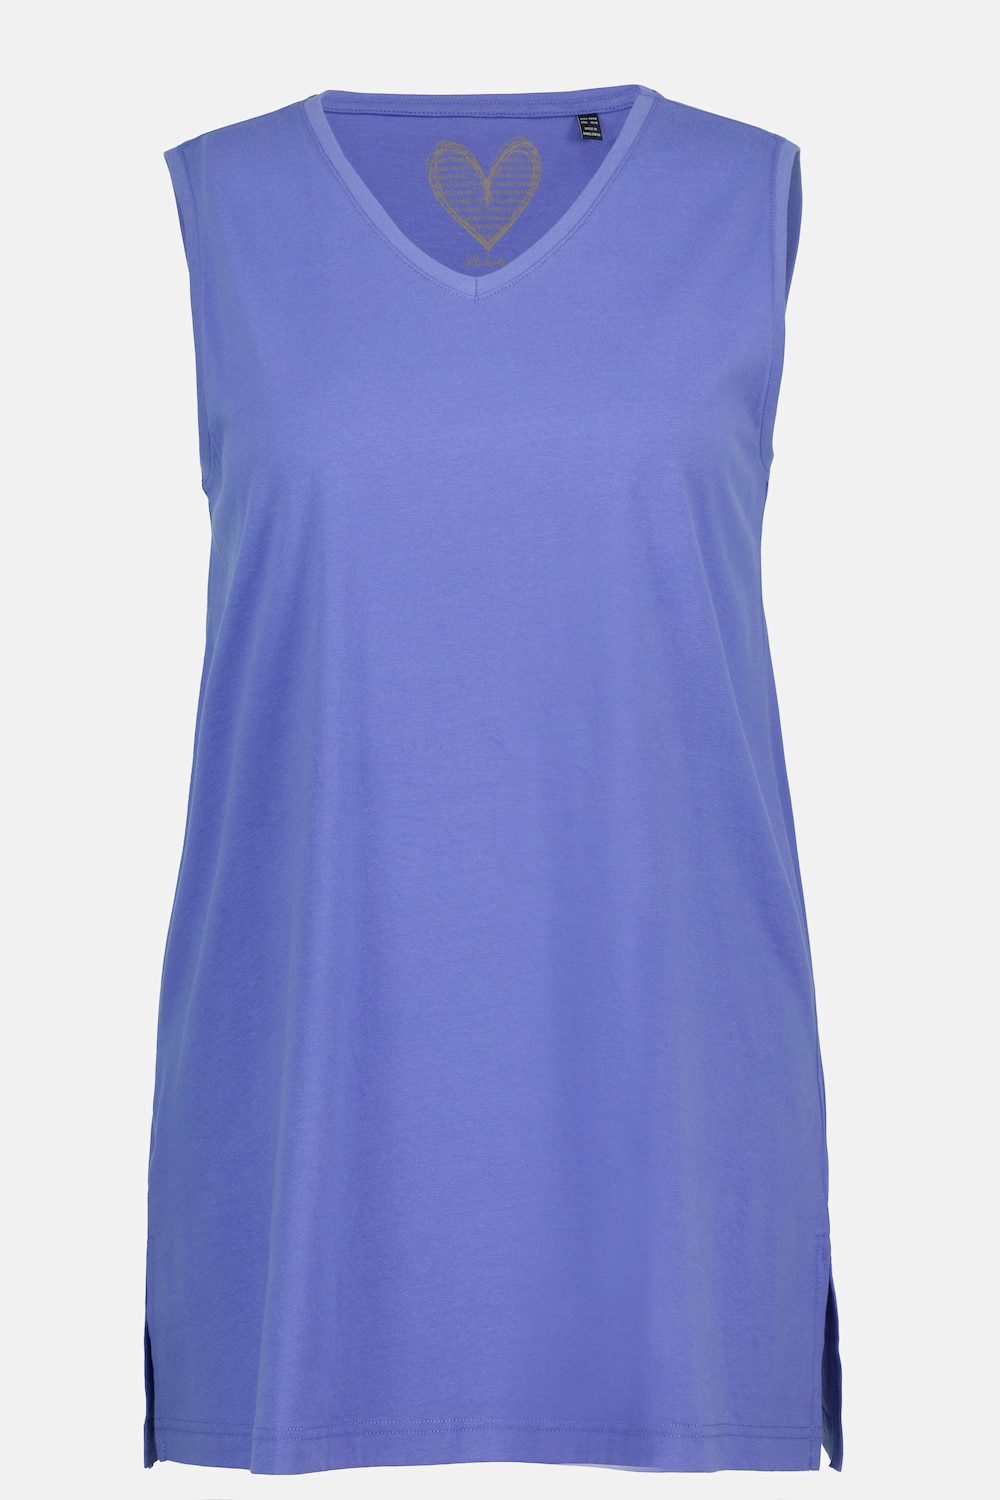 Plus Size Basic V-Neck Relaxed Fit Cotton Knit Tank, Woman, purple, size: 20/22, Ulla Popken